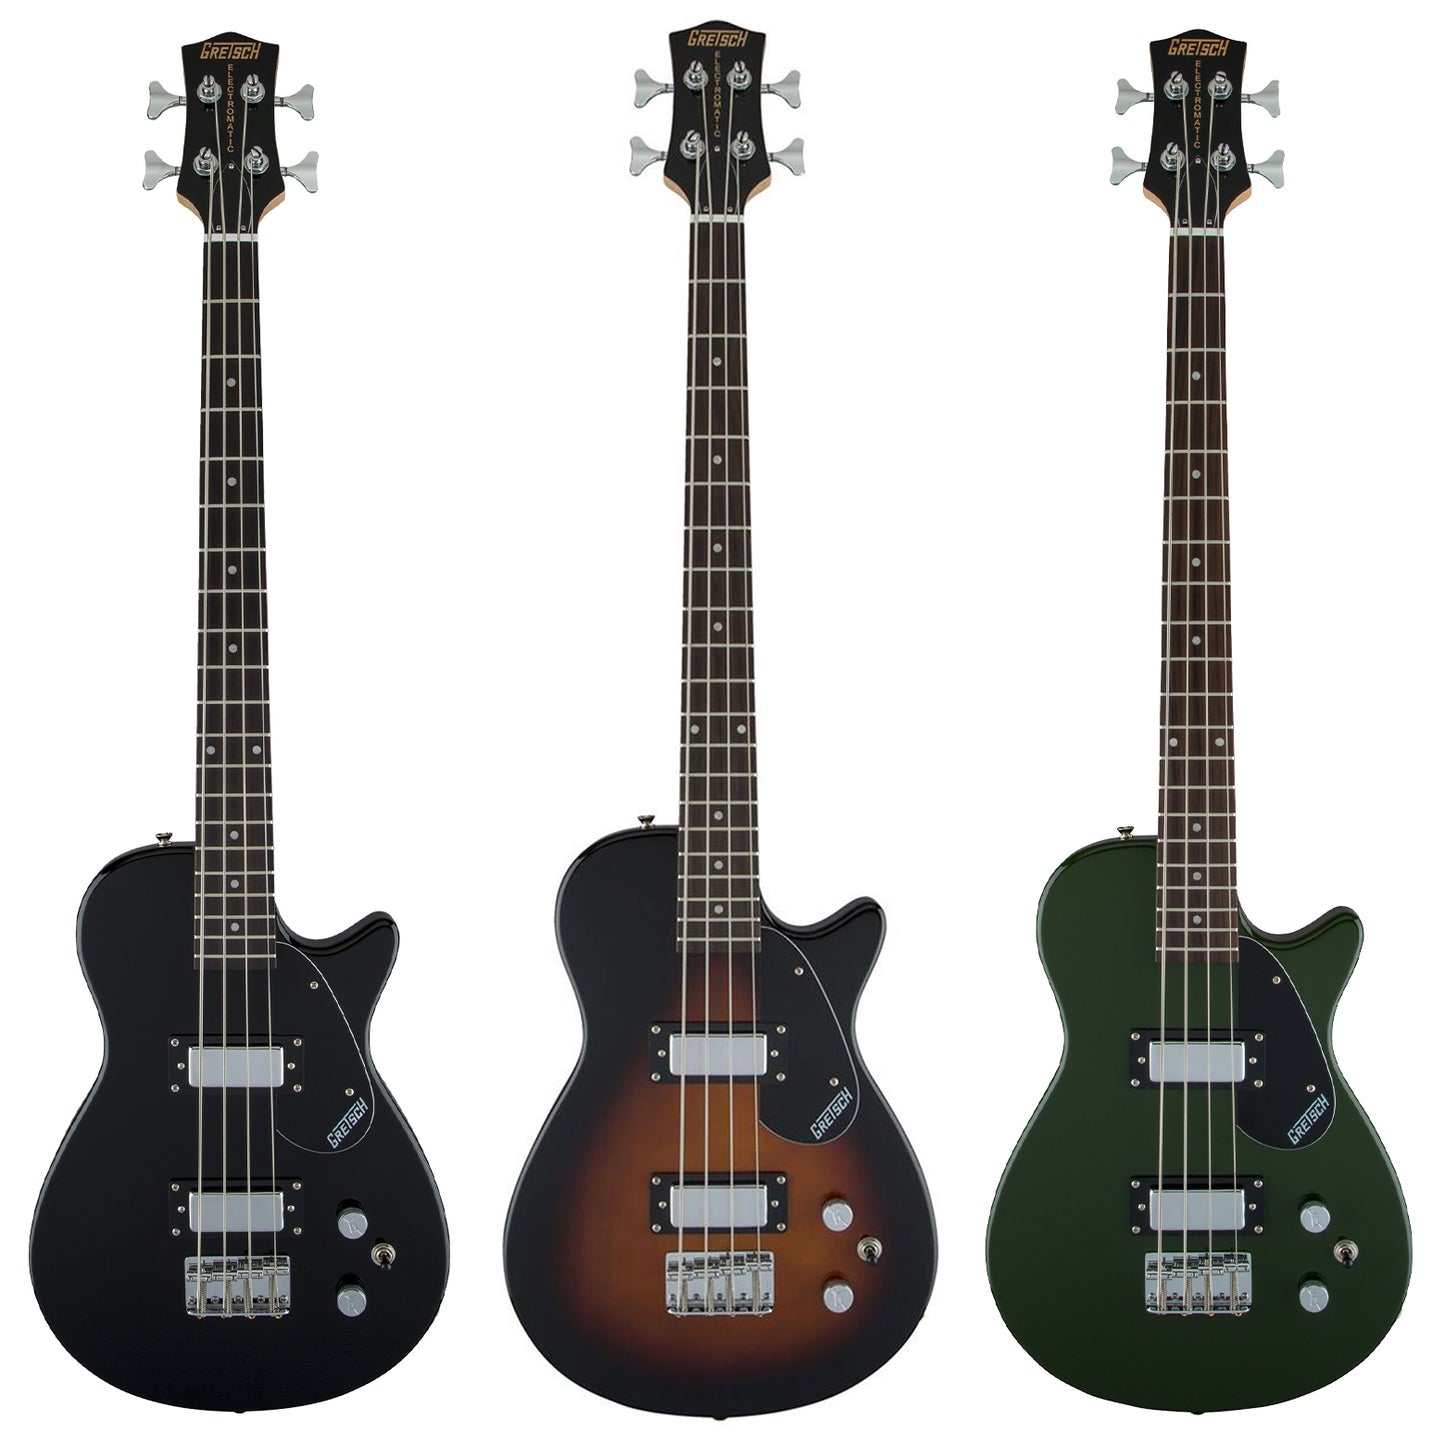 Gretsch G2220 Electromatic Junior Jet Bass II Short-Scale Electric Bass Guitar with Mini Humbucking Pickups Right-Handed (Black, T. Sunburst, Torino Green)